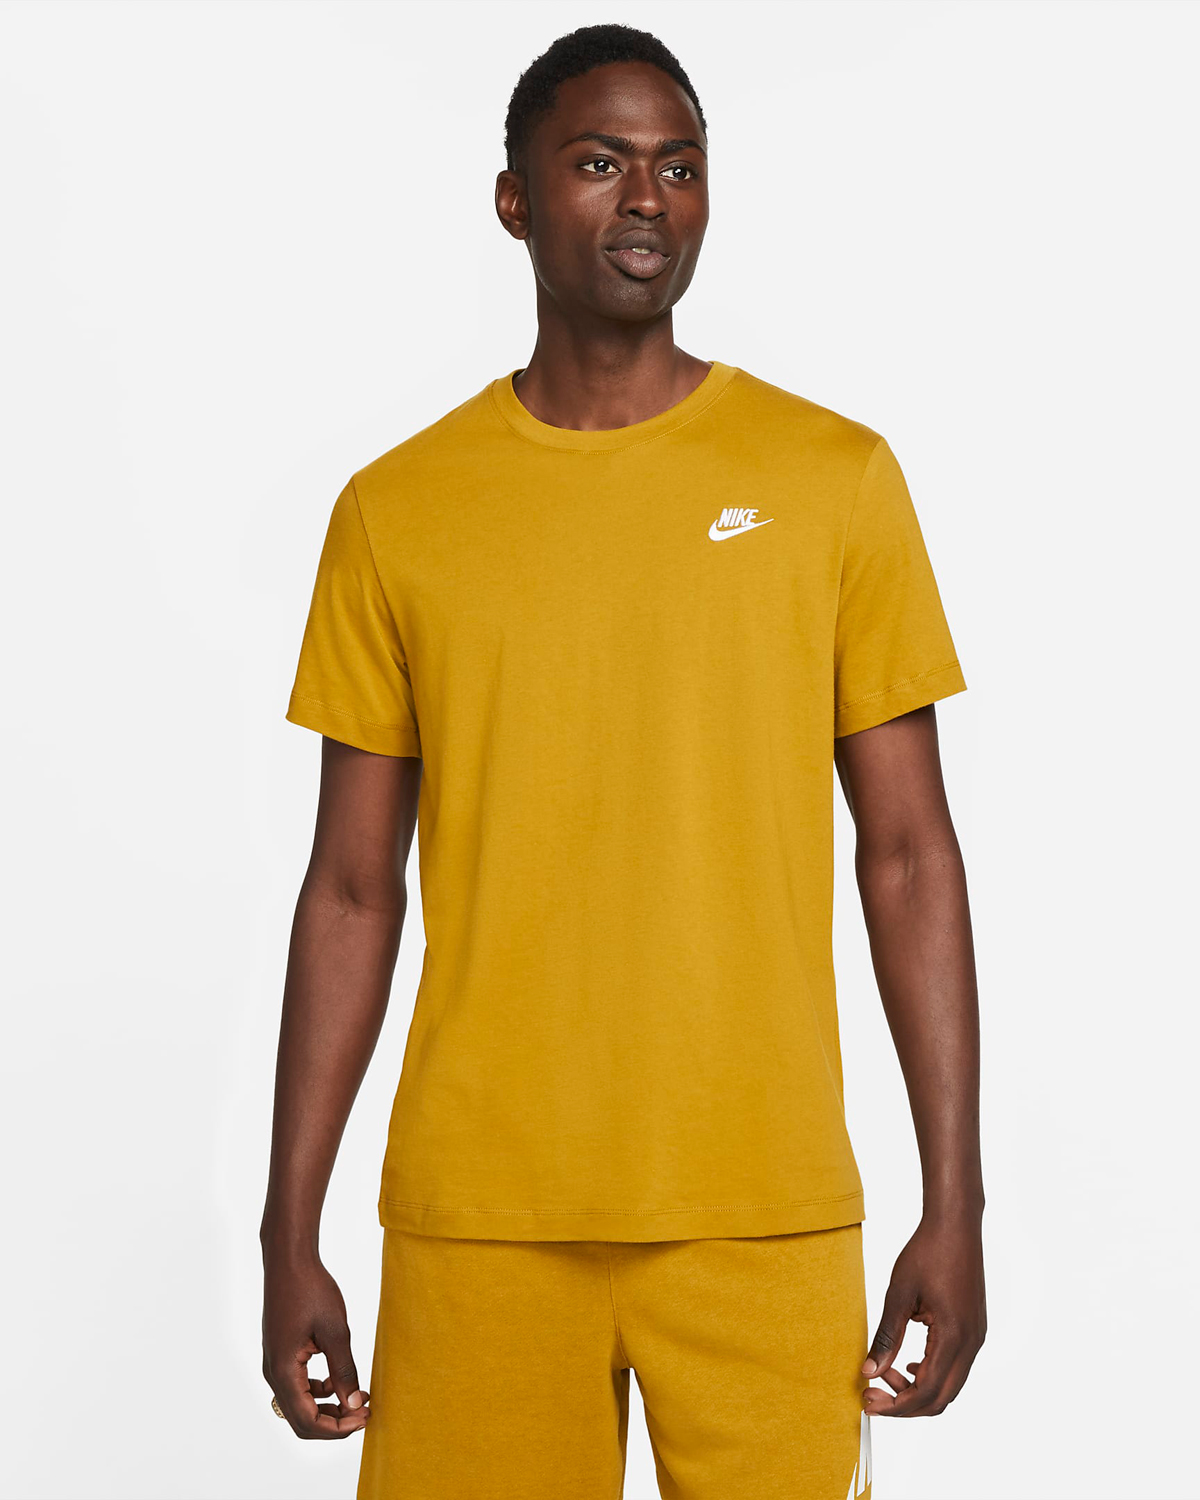 Nike Dunk Low Bronzine Saturn Gold Shirt Outfit